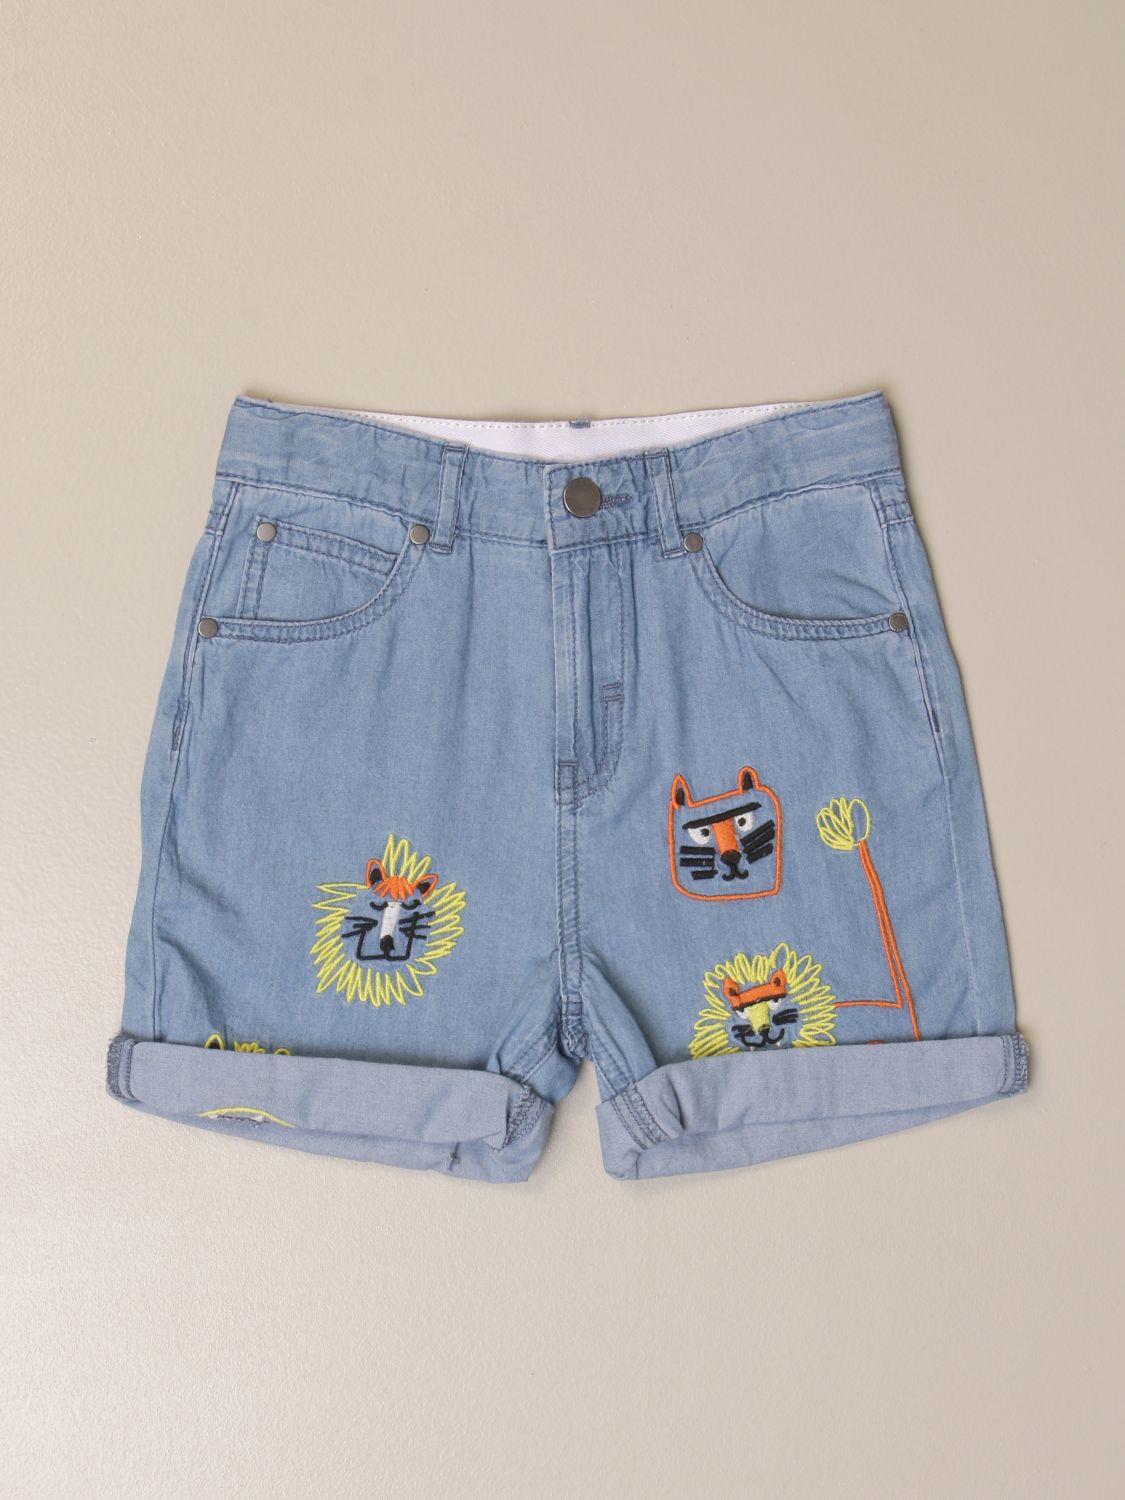 STELLA MCCARTNEY: denim shorts with animal embroidery - Blue | Stella  Mccartney shorts 602315 SQK16 online on 